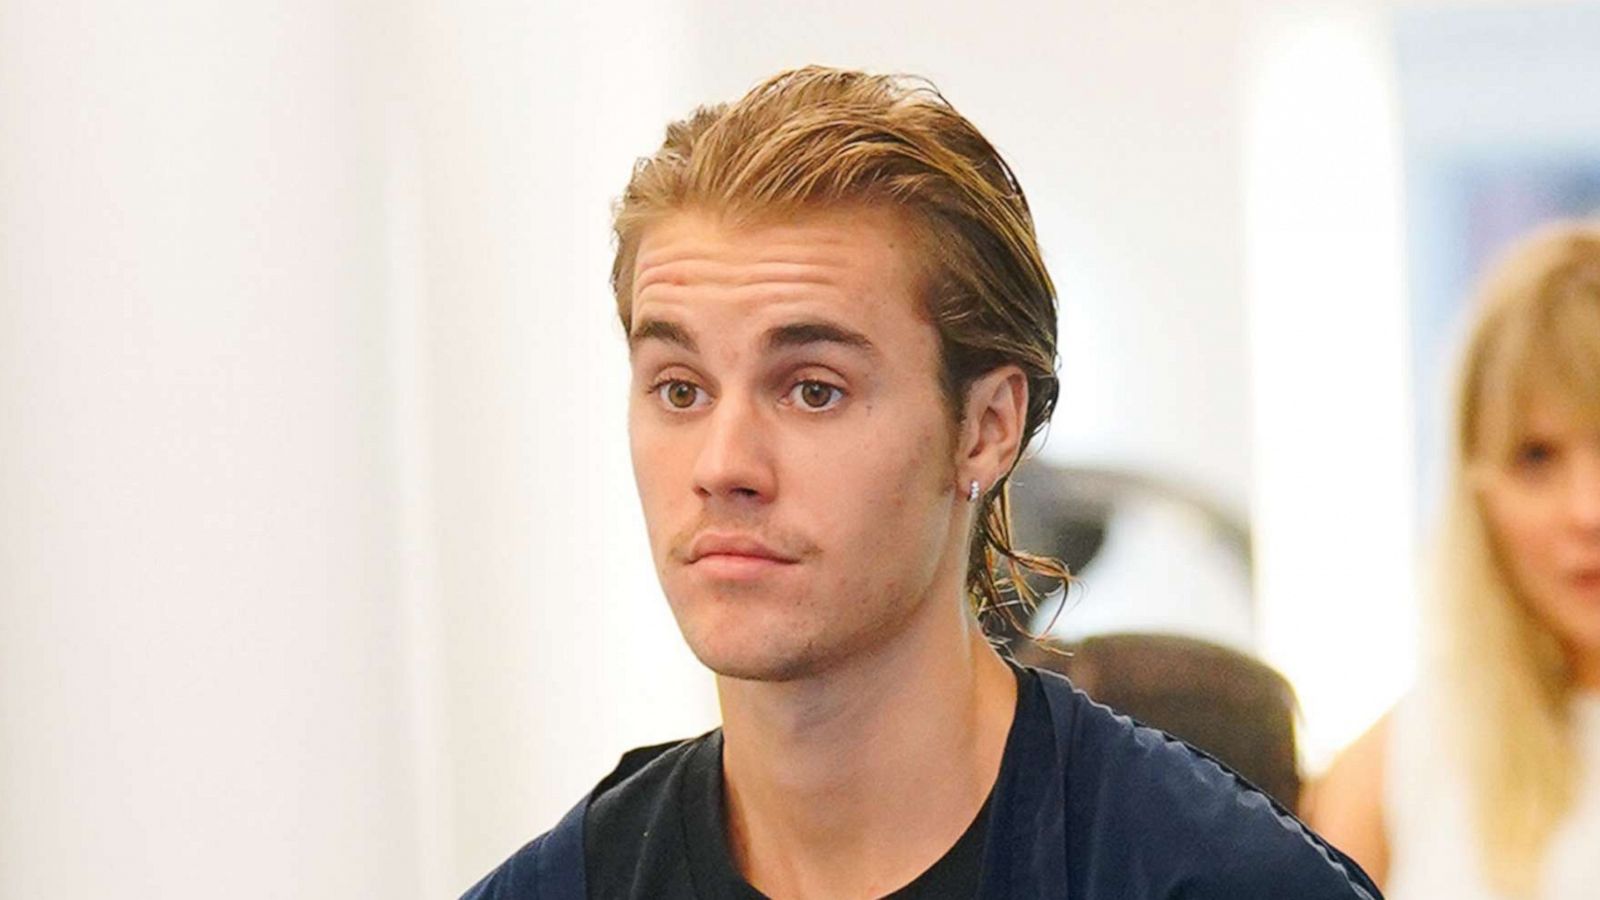 PHOTO: Justin Bieber gets his hair cut at a salon in New York, Aug. 8, 2018.